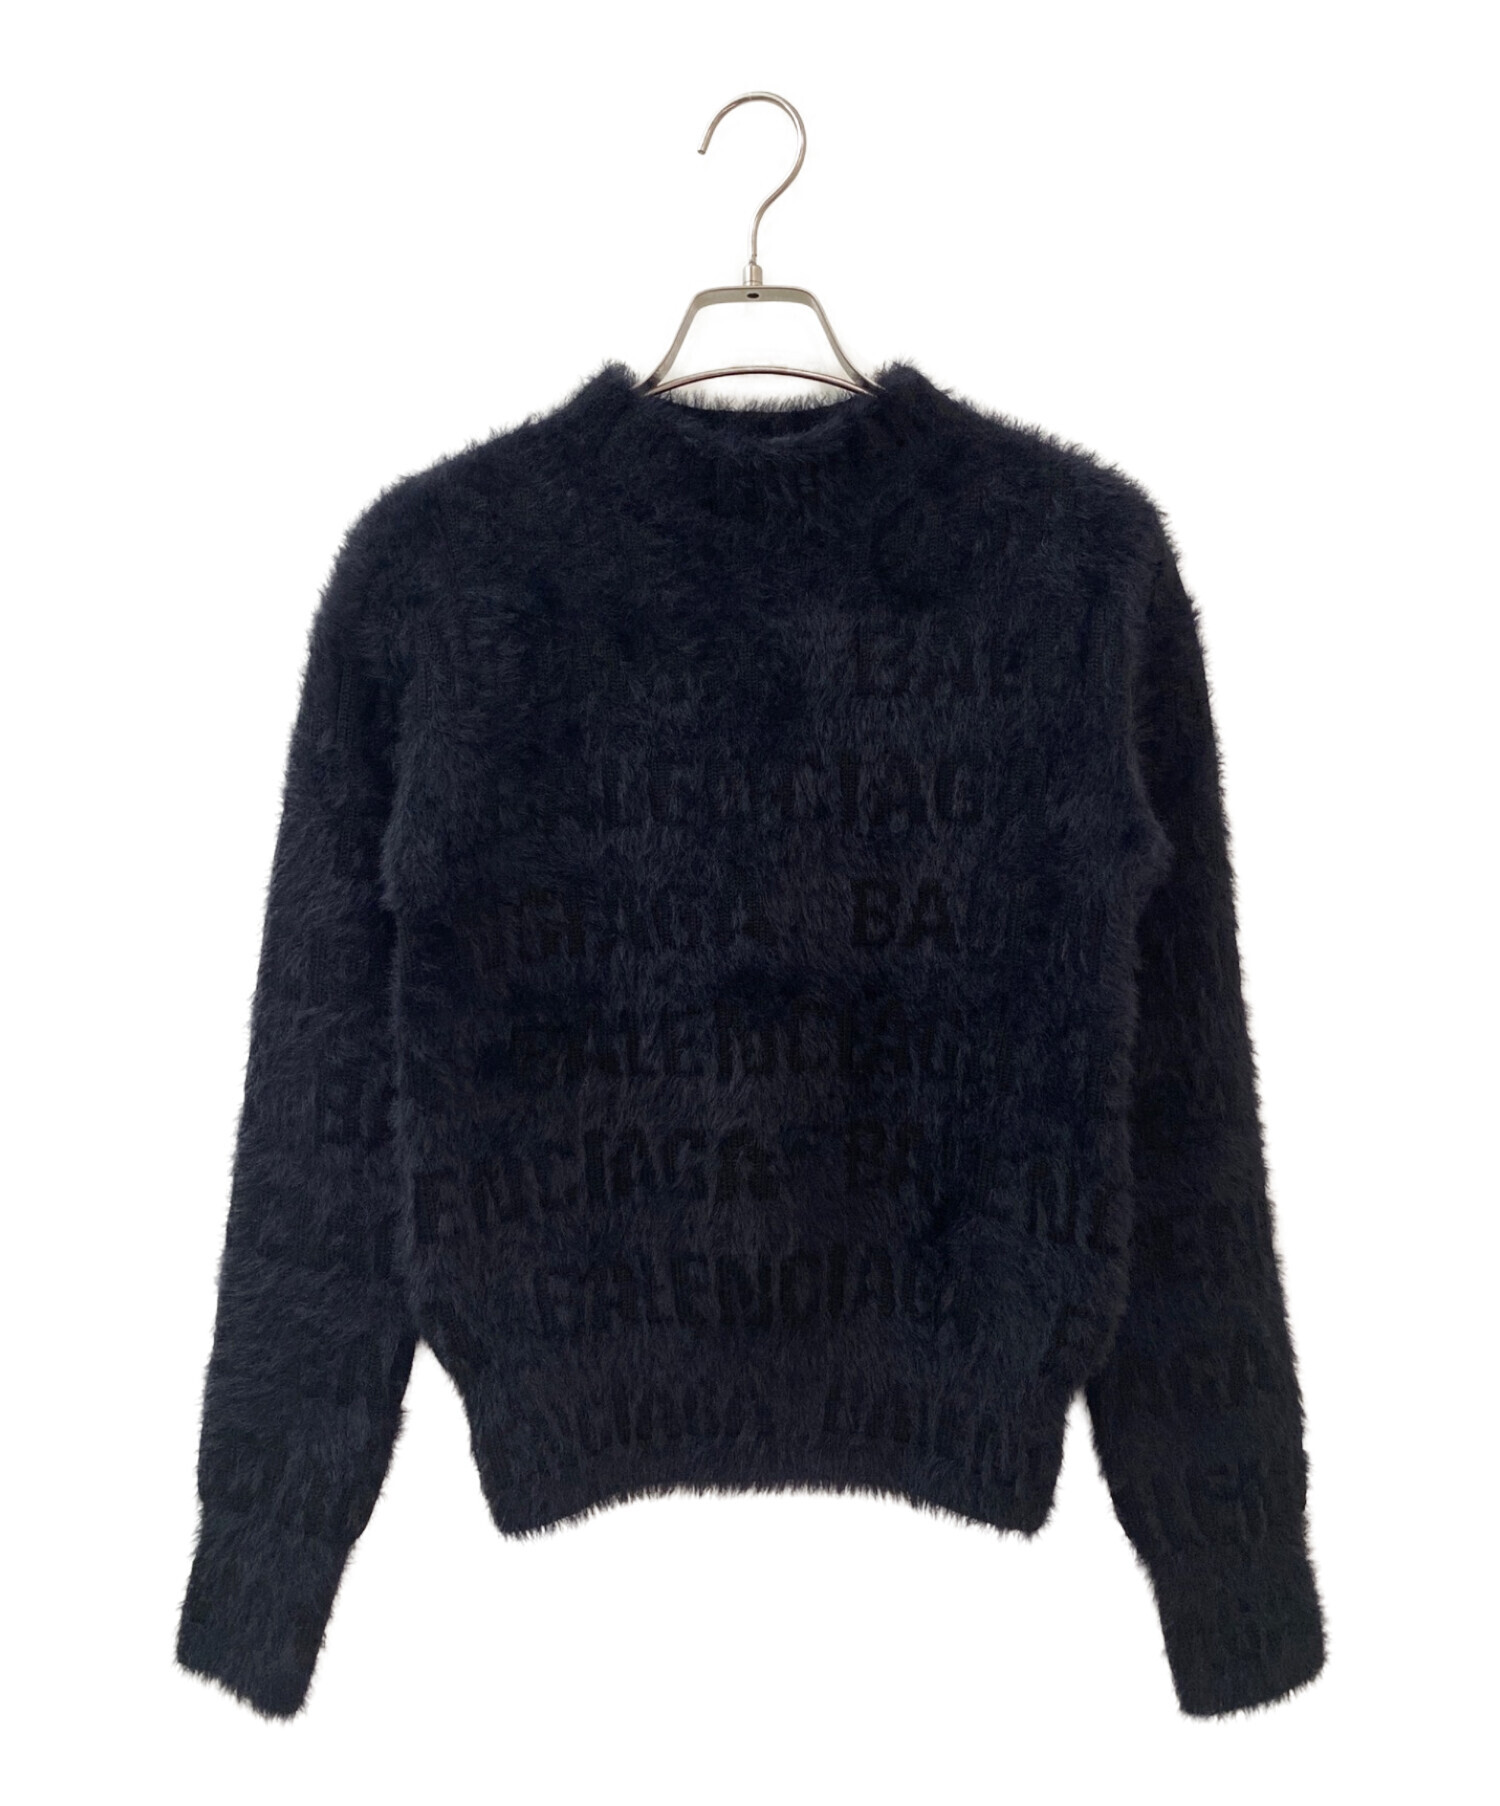 BALENCIAGA xs sweaterメンズ - ニット/セーター